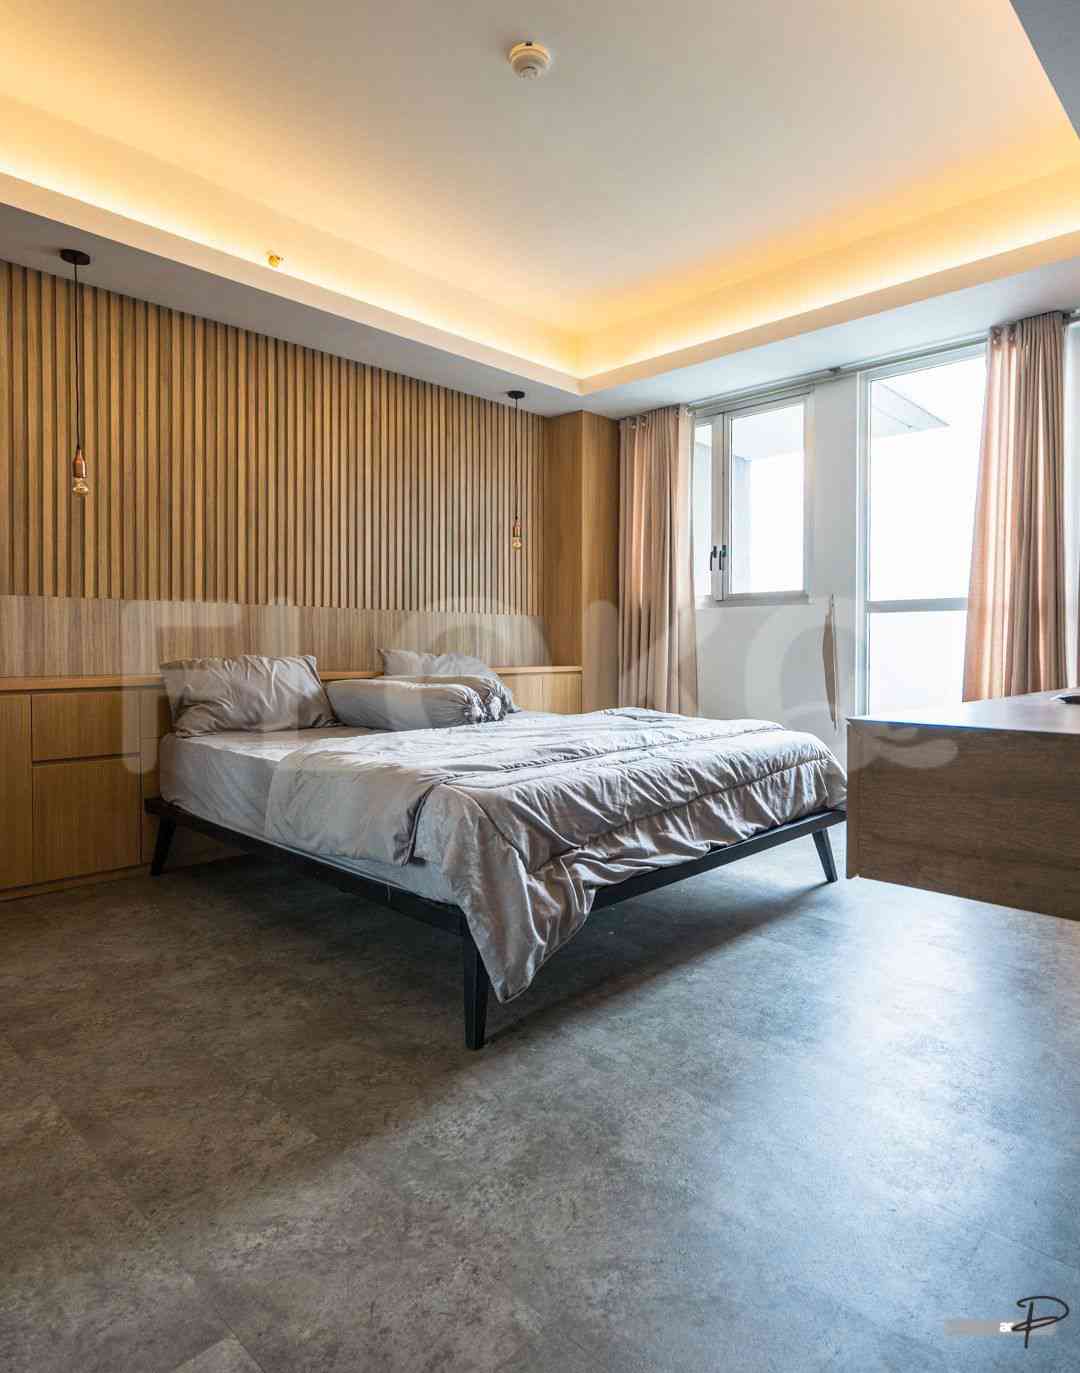 2 Bedroom on 20th Floor for Rent in Kemang Village Residence - fke7b0 7